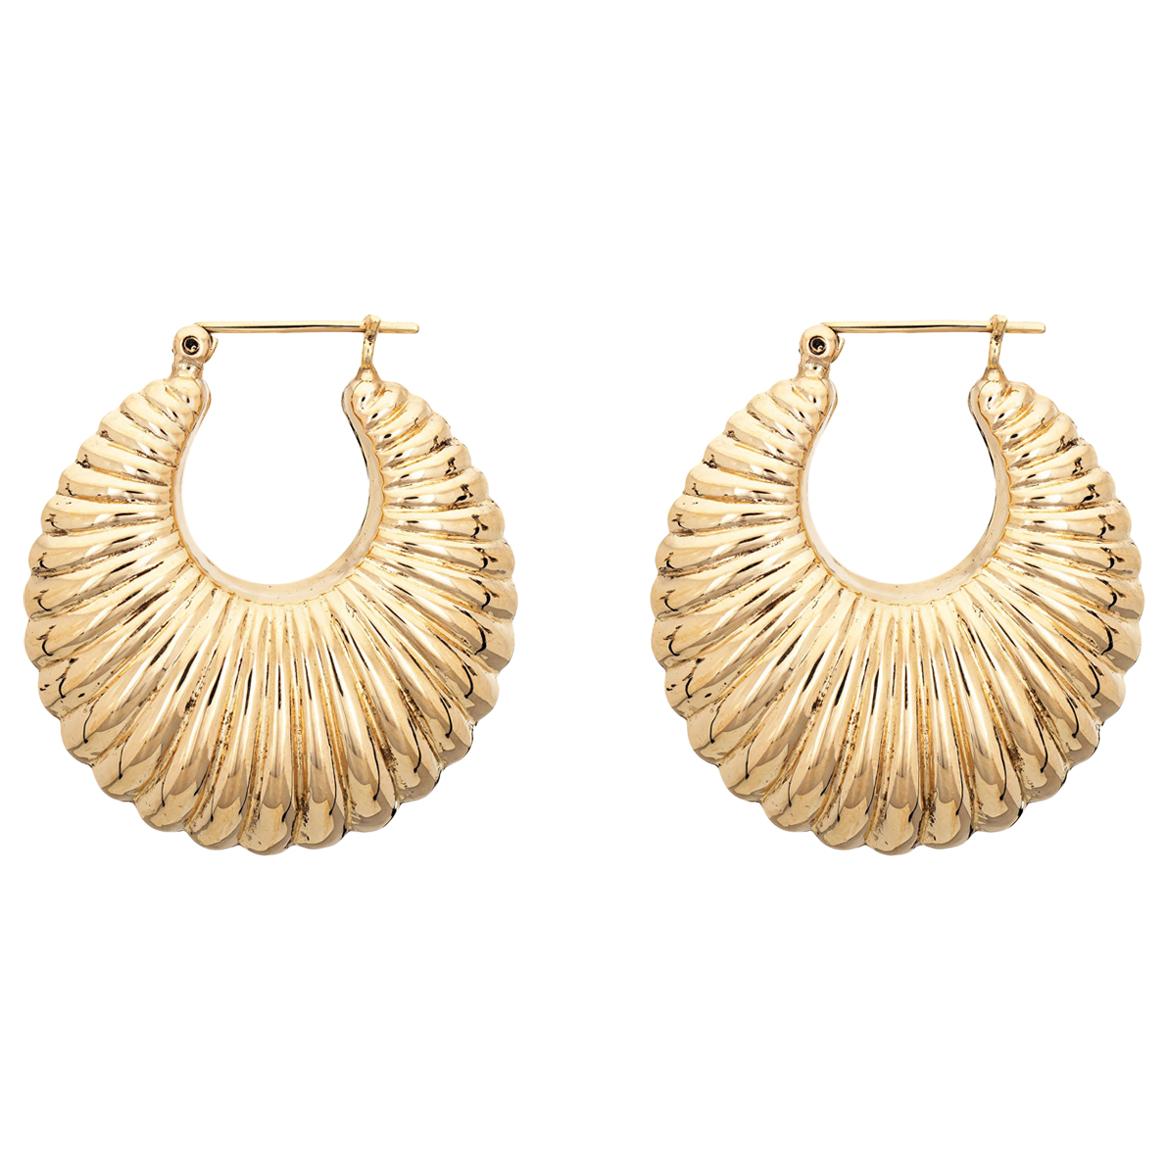 Mid Sized Hoop Earrings Vintage 14 Karat Gold Puffed Shell Design Jewelry